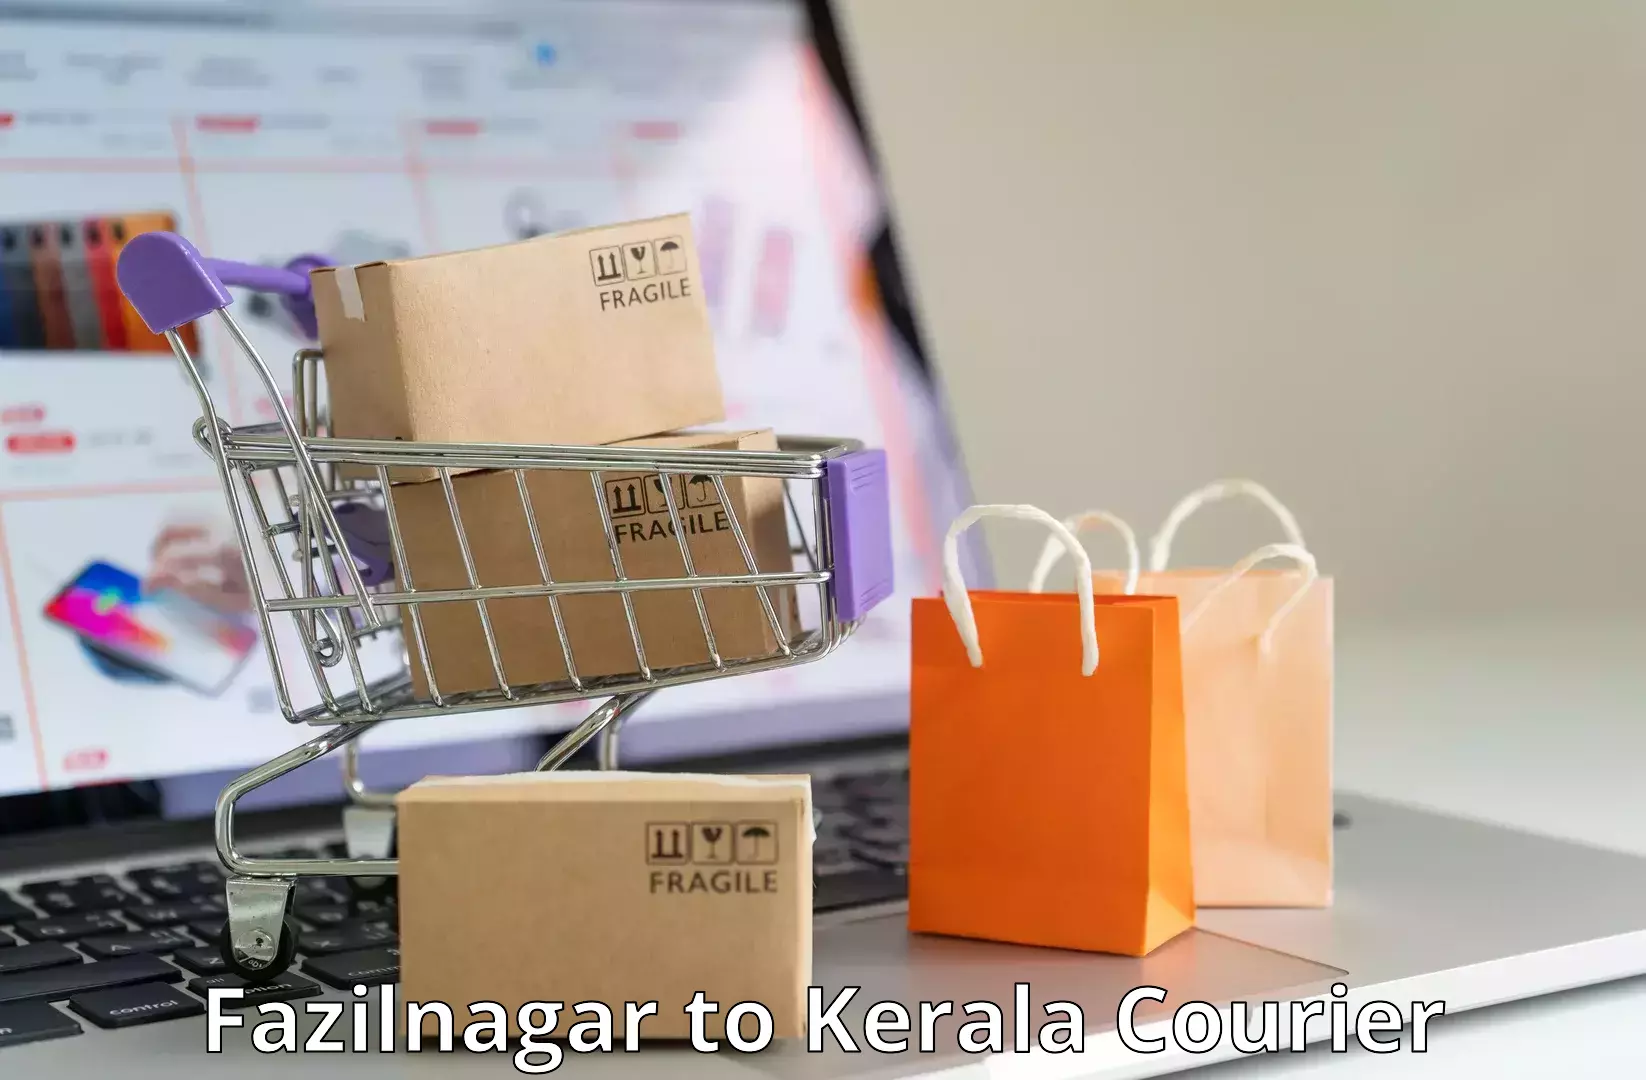 Courier service comparison Fazilnagar to Kozhikode